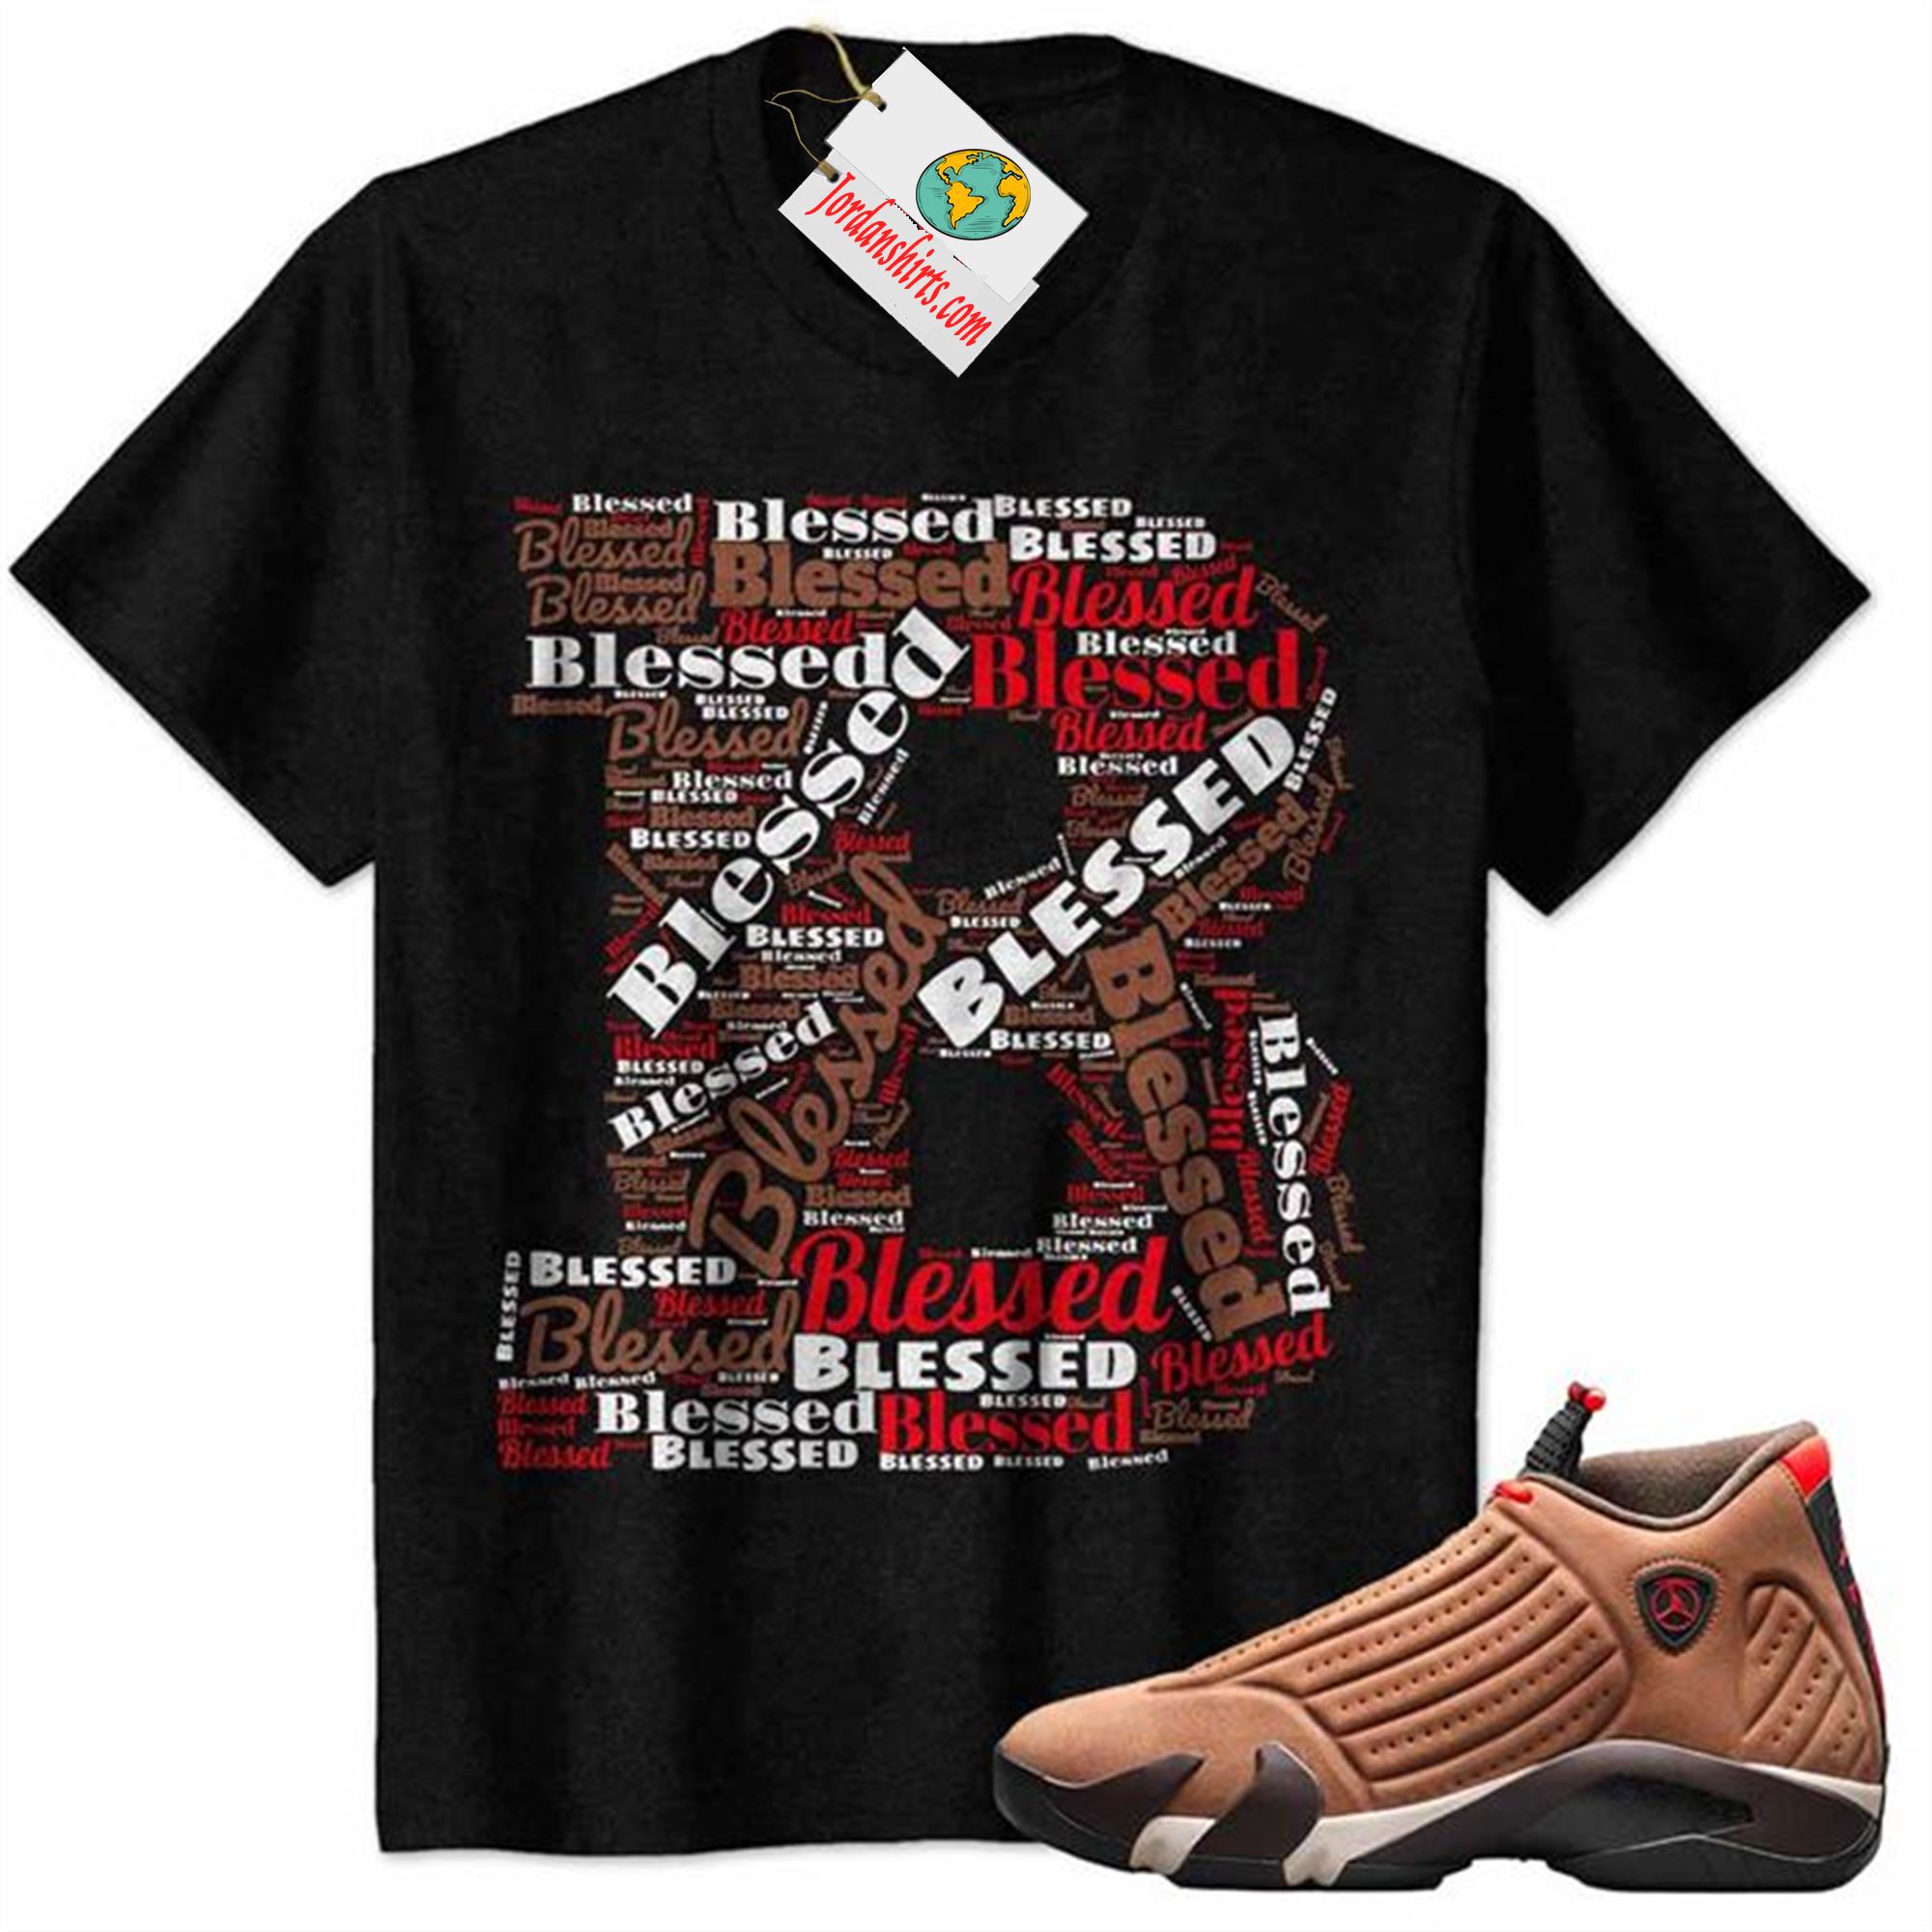 Jordan 14 Shirt, B Blessed Blessing Black Air Jordan 14 Winterized 14s Full Size Up To 5xl